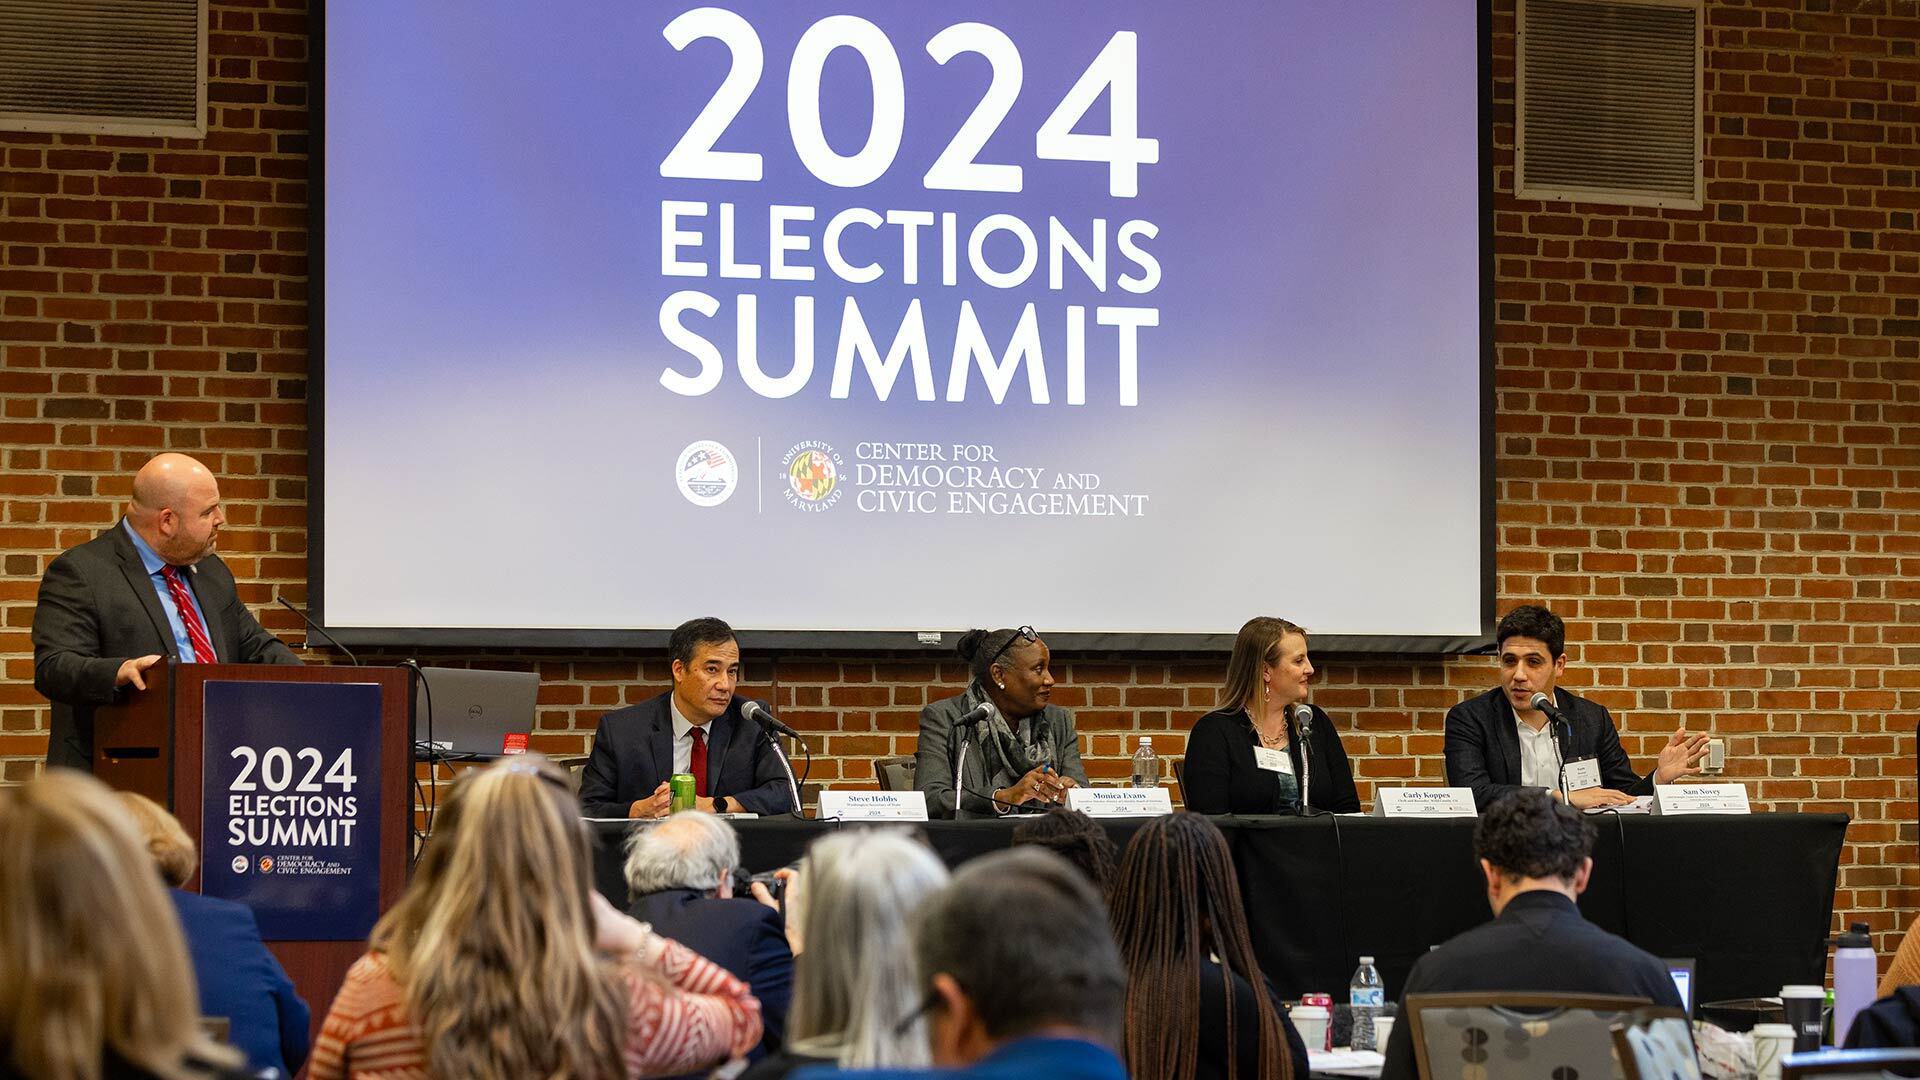 panelists speak on stage at 2024 Elections Summit